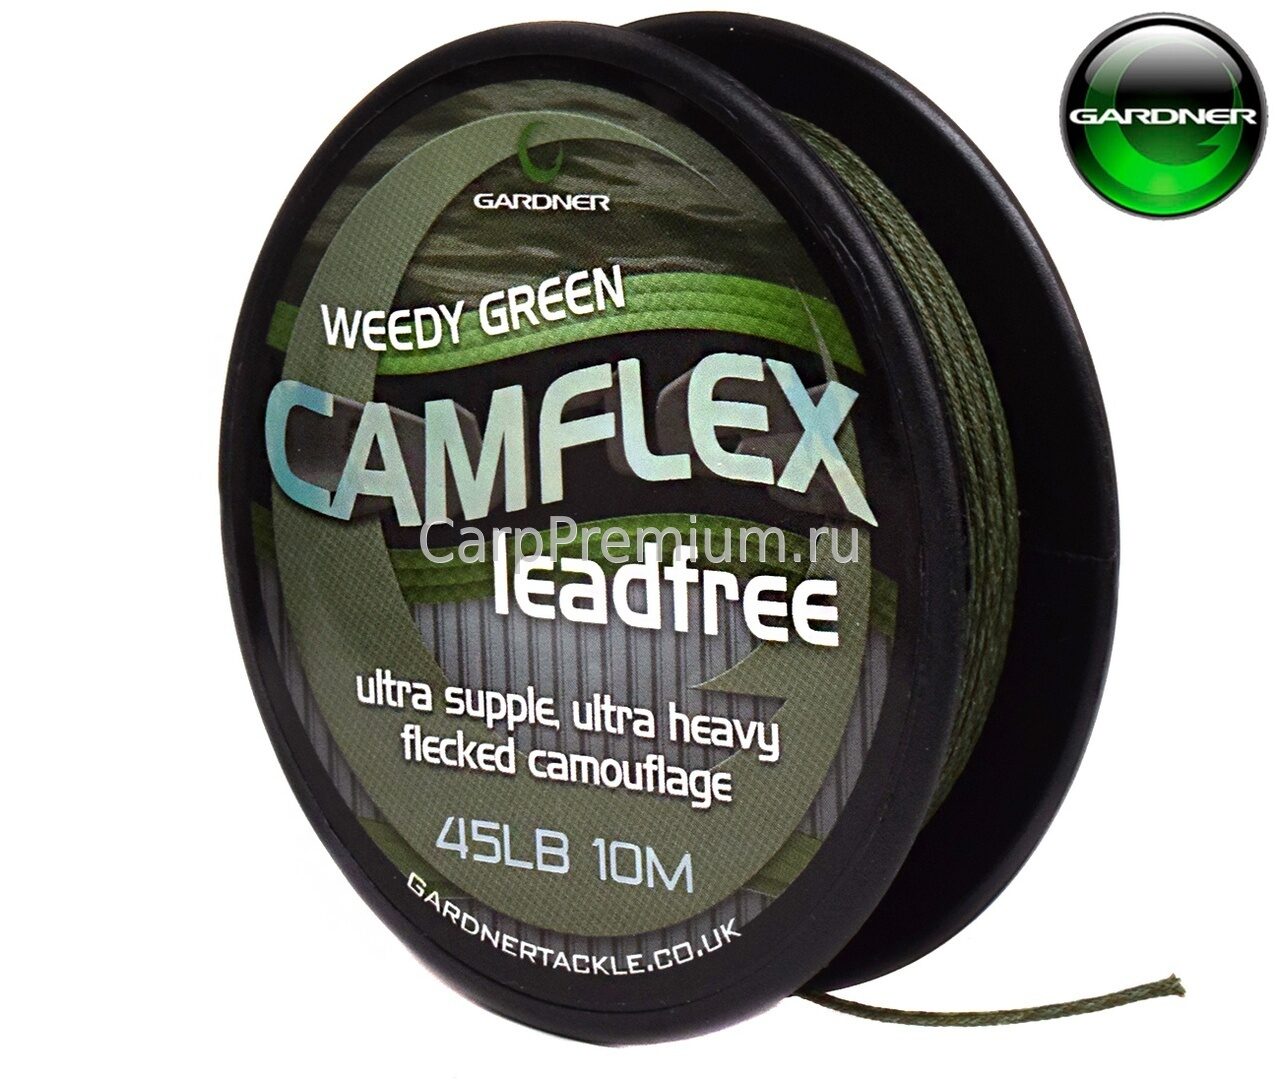 Лидкор без свинцового сердечника Зеленый Gardner (Гарднер) - CamFlex Leadfree Weedy Green 20.4 кг / 45 lb, 10 м